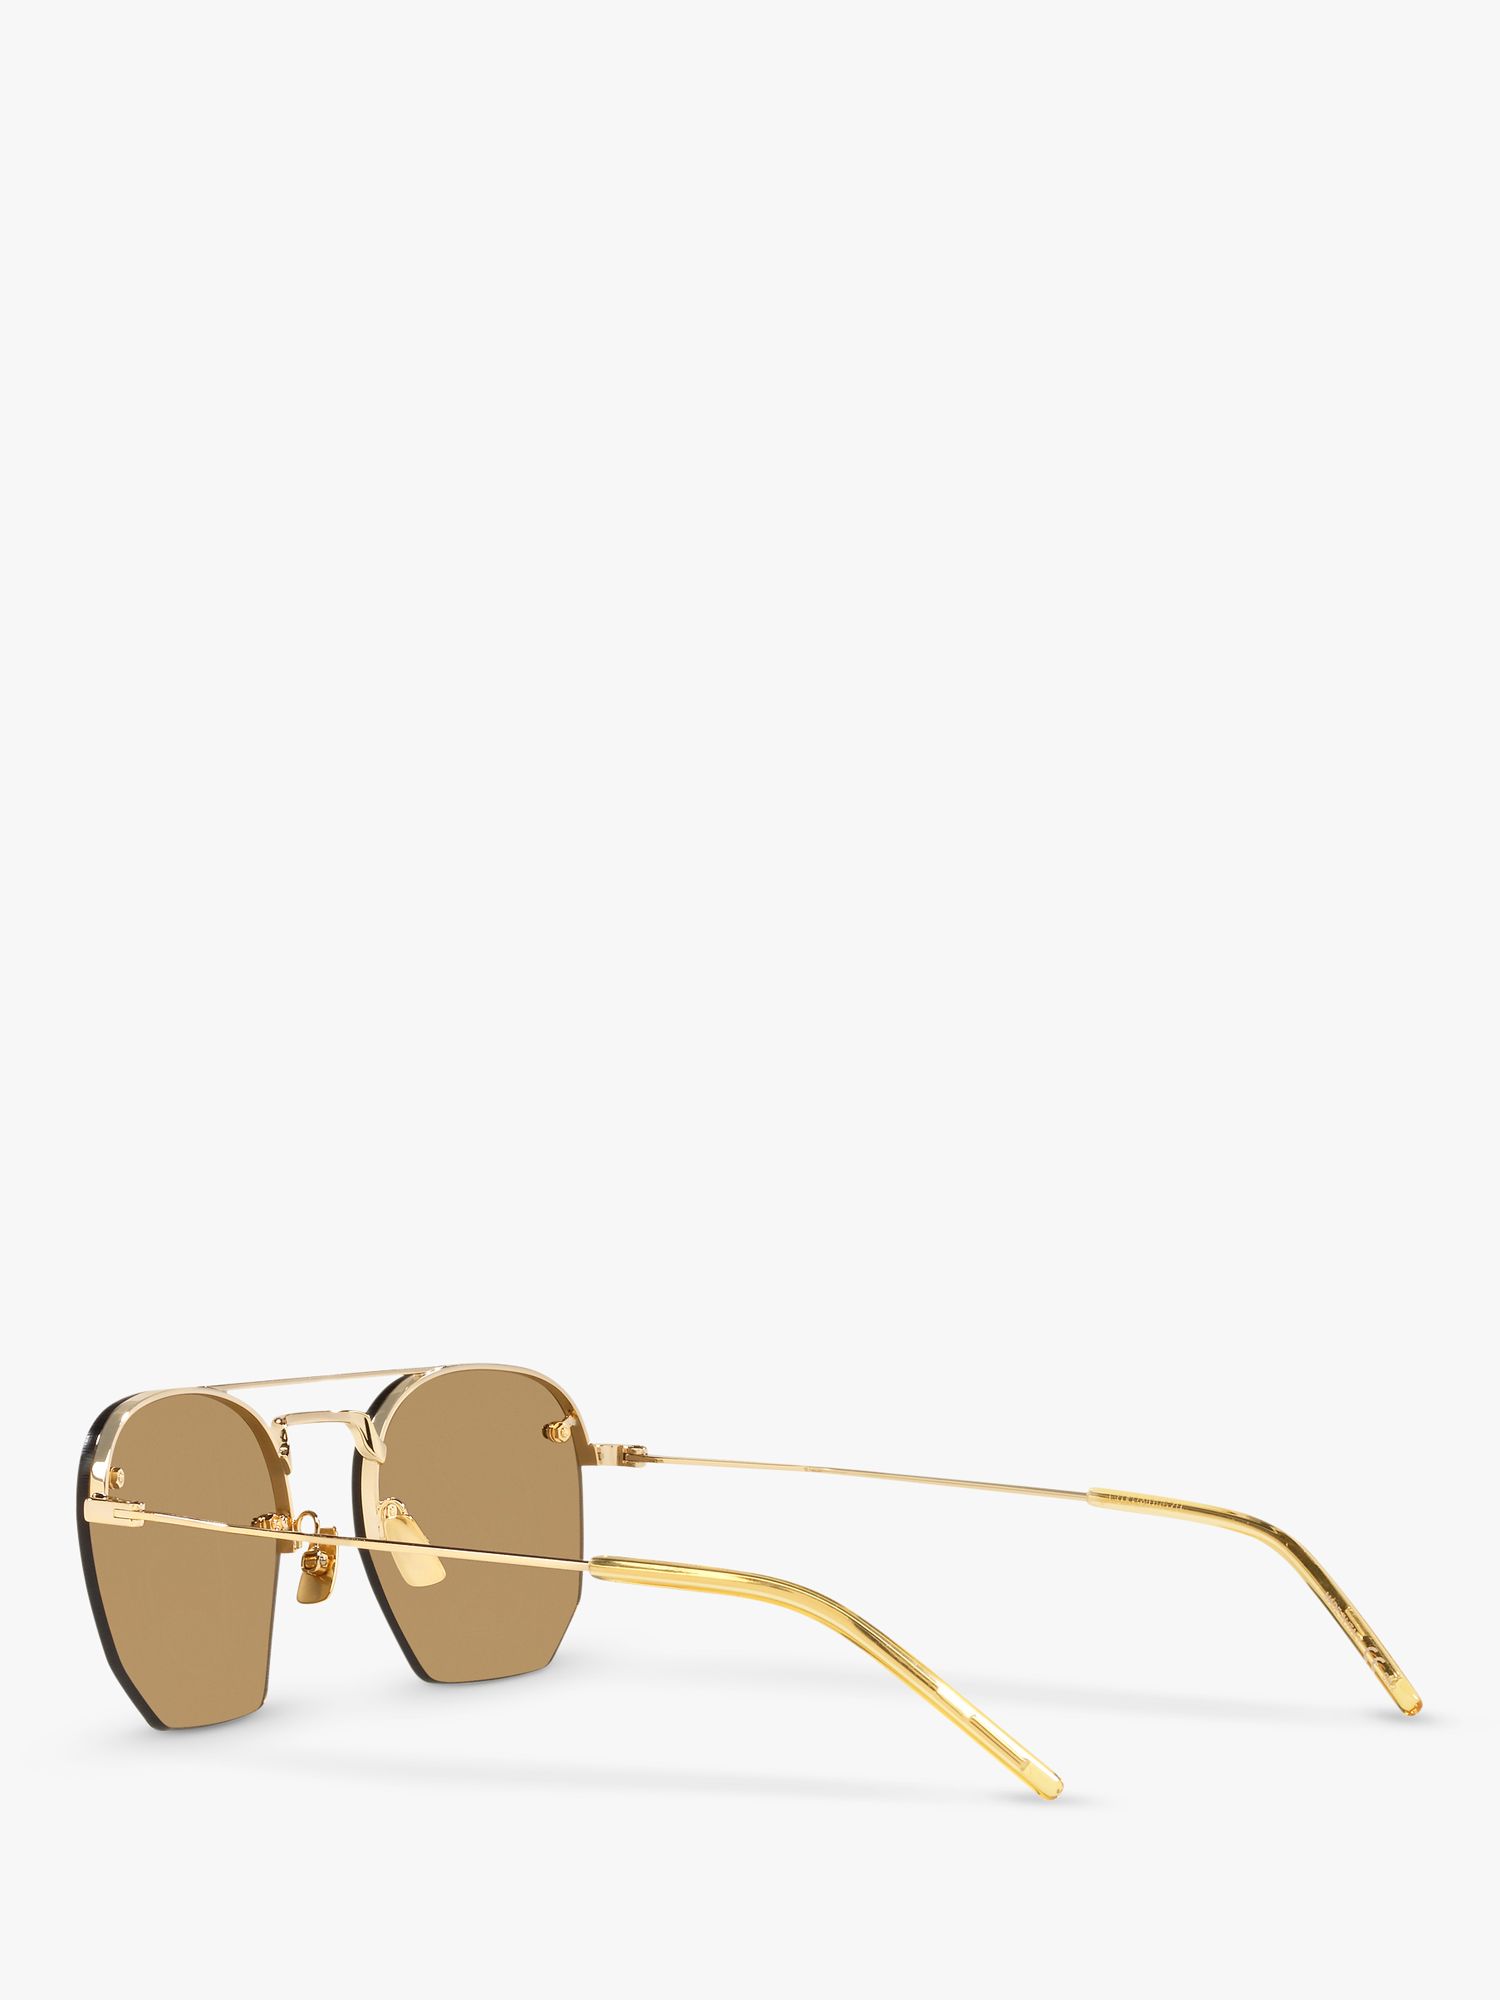 Saint Laurent Men's Sunglasses Irregular Rimless Silver/Grey SL 422-00